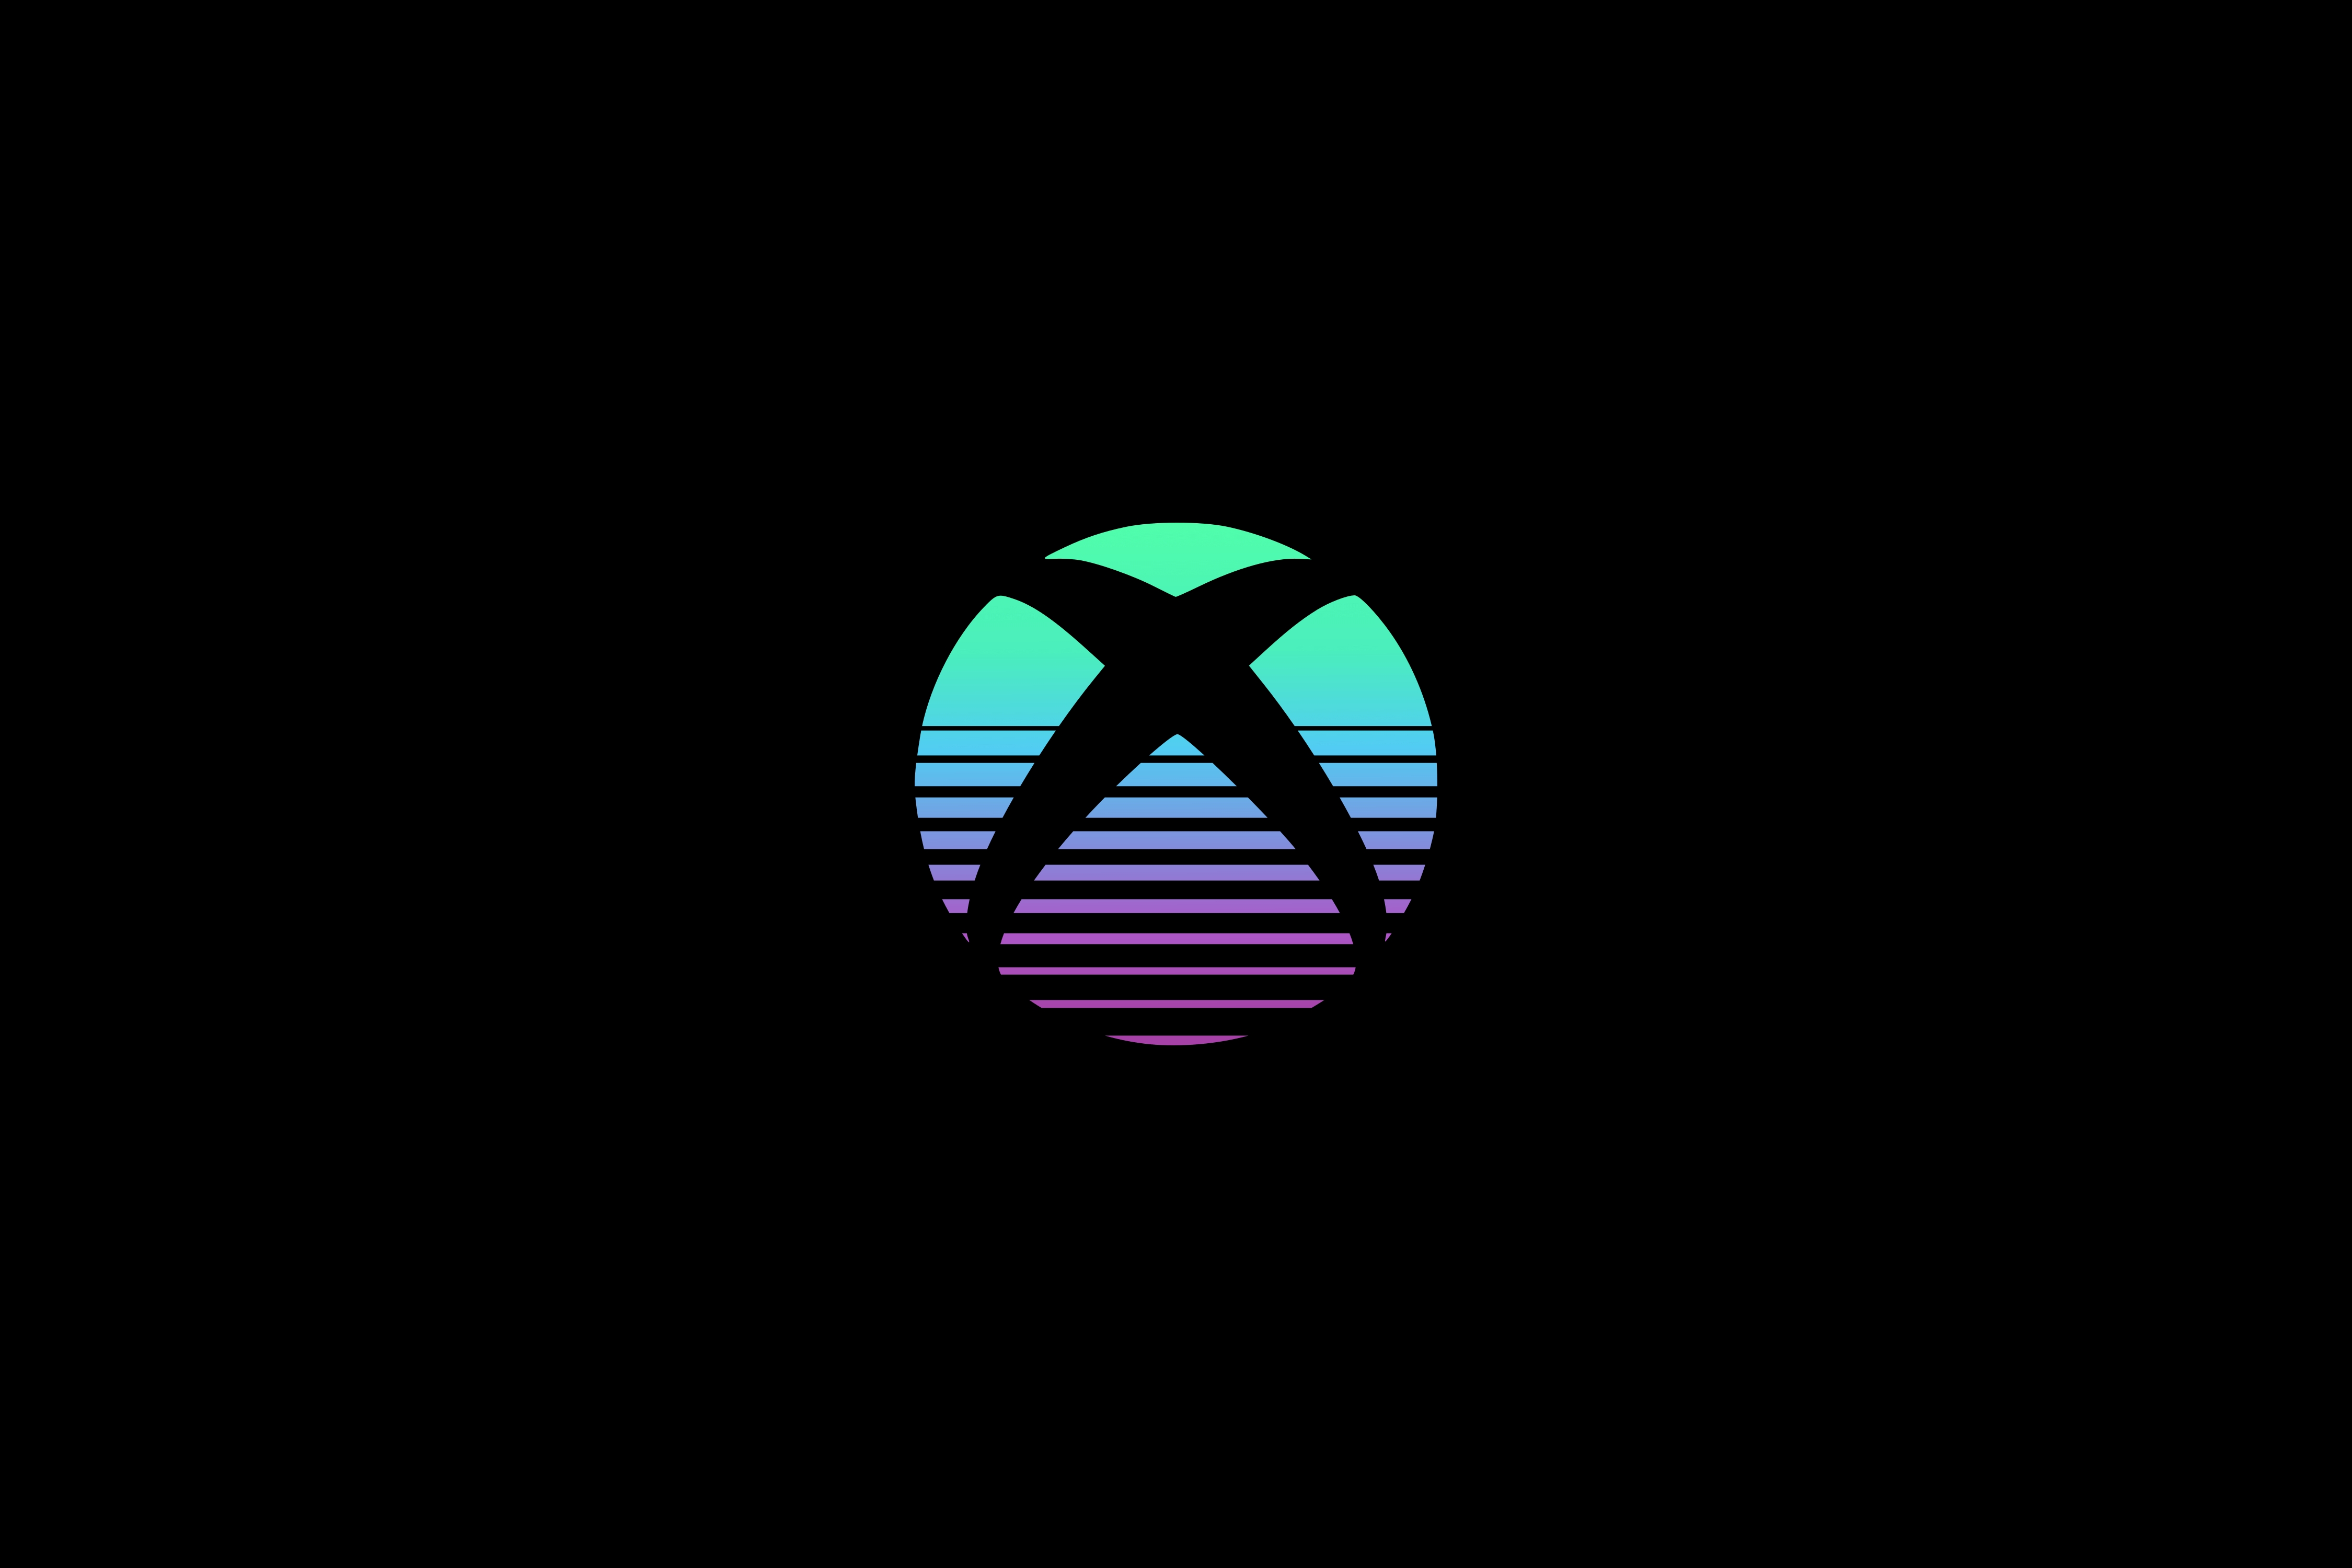 HD wallpaper, Xbox, Logo, Amoled, Simple, 5K, Black Background, Gradient